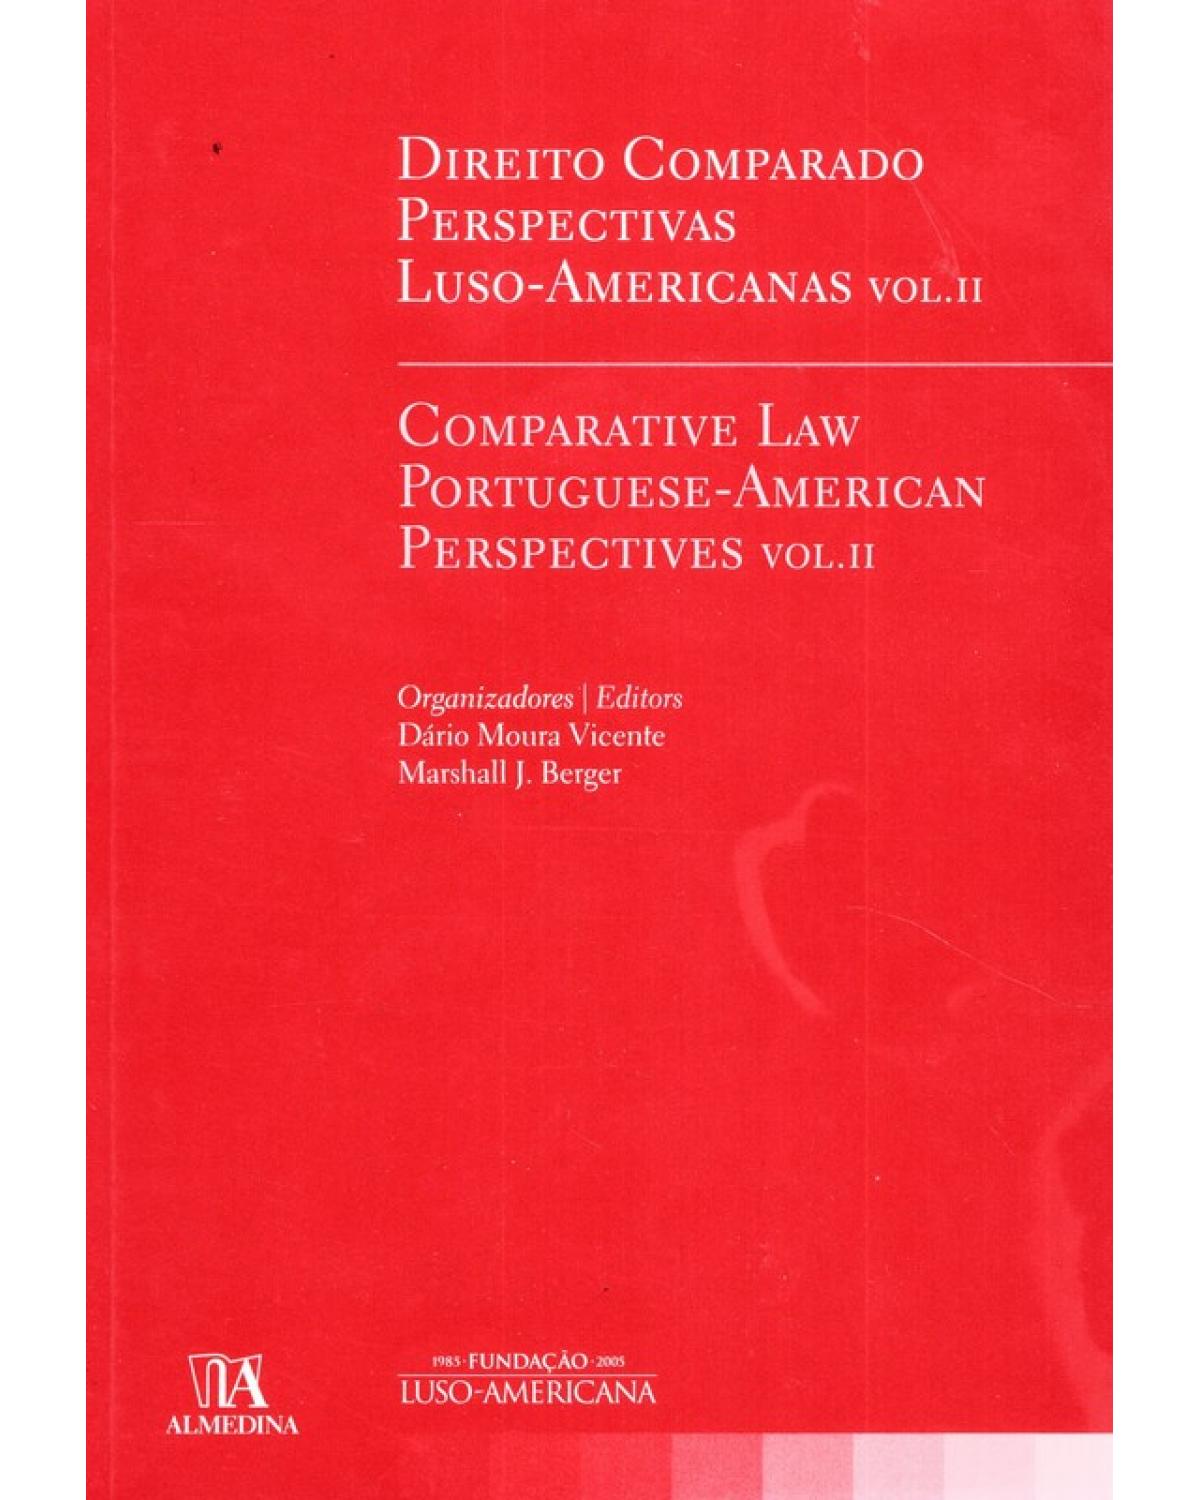 Direito Comparado - Volume II: Perspectivas Luso-Americanas - Comparative Law Portuguese - American Perspectives